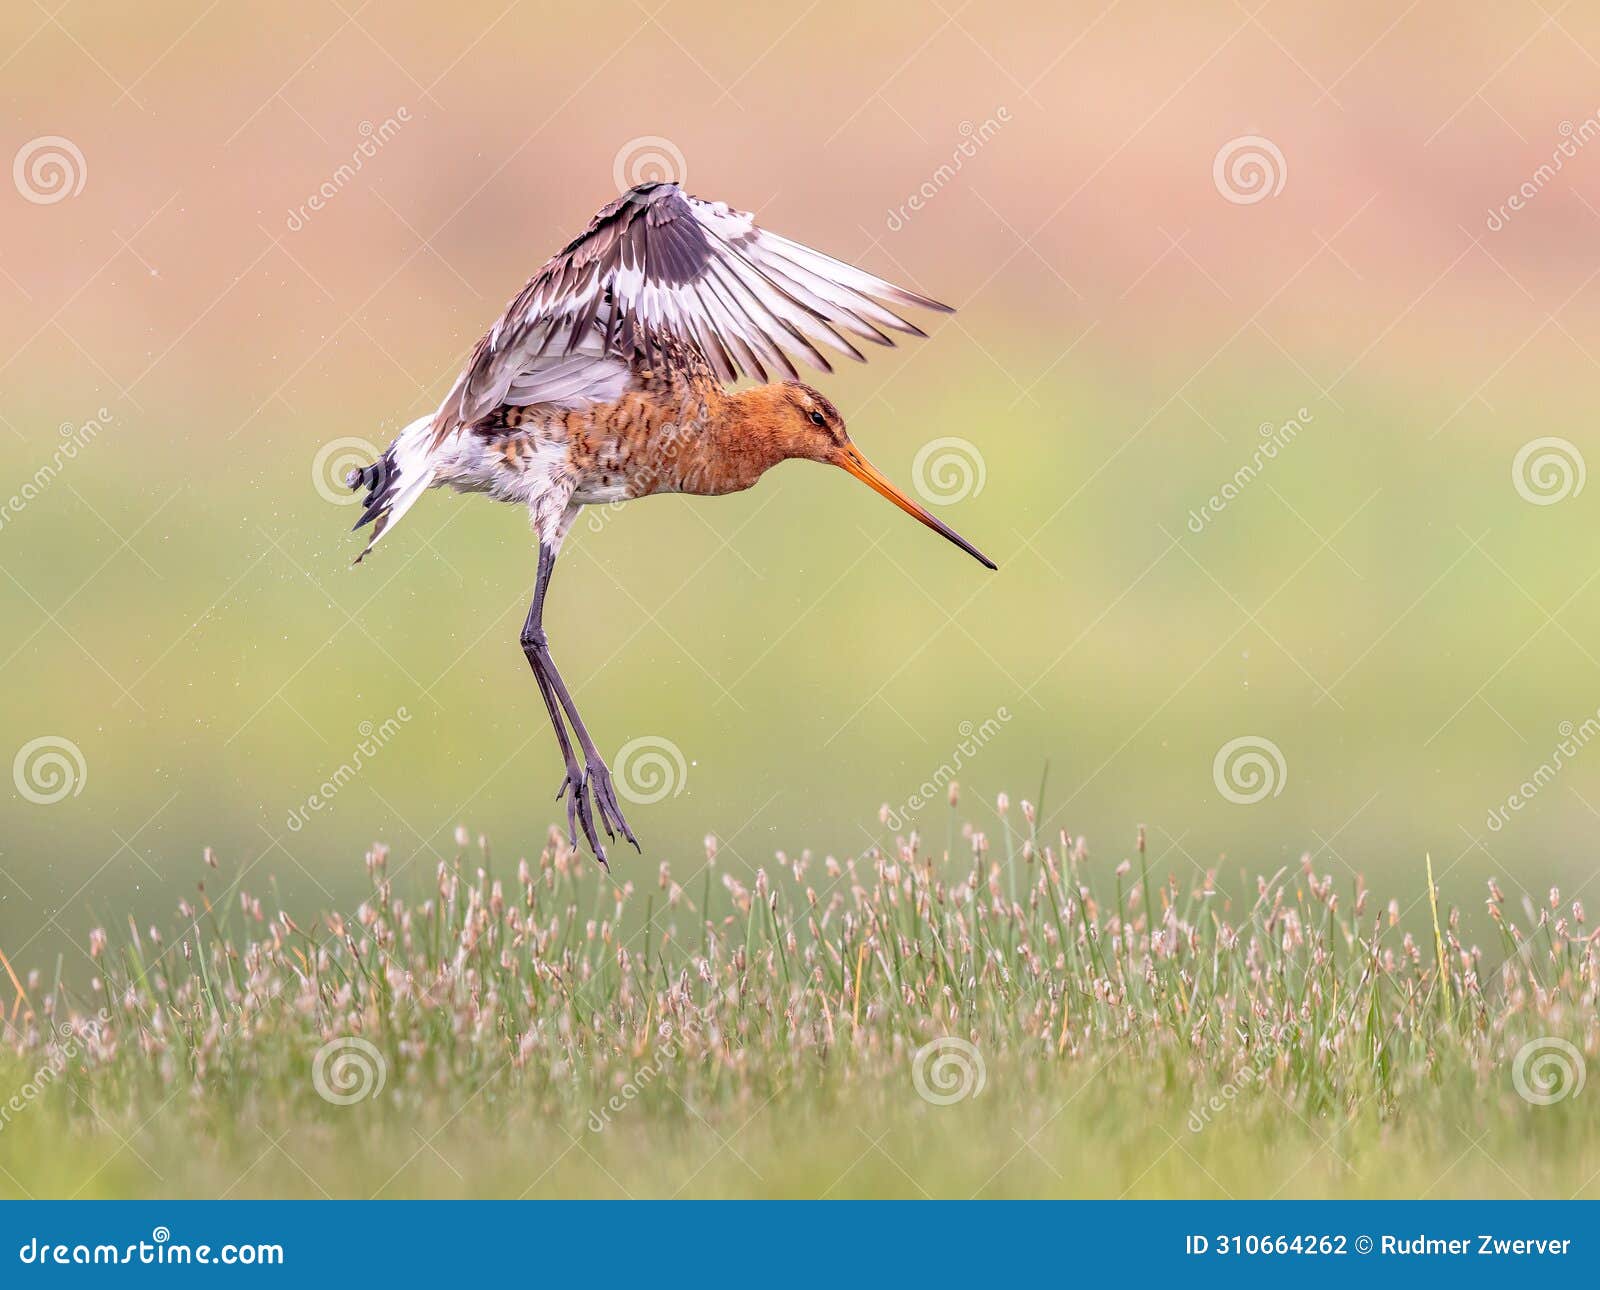 black-tailed godwit wader bird preparing for landing and calling